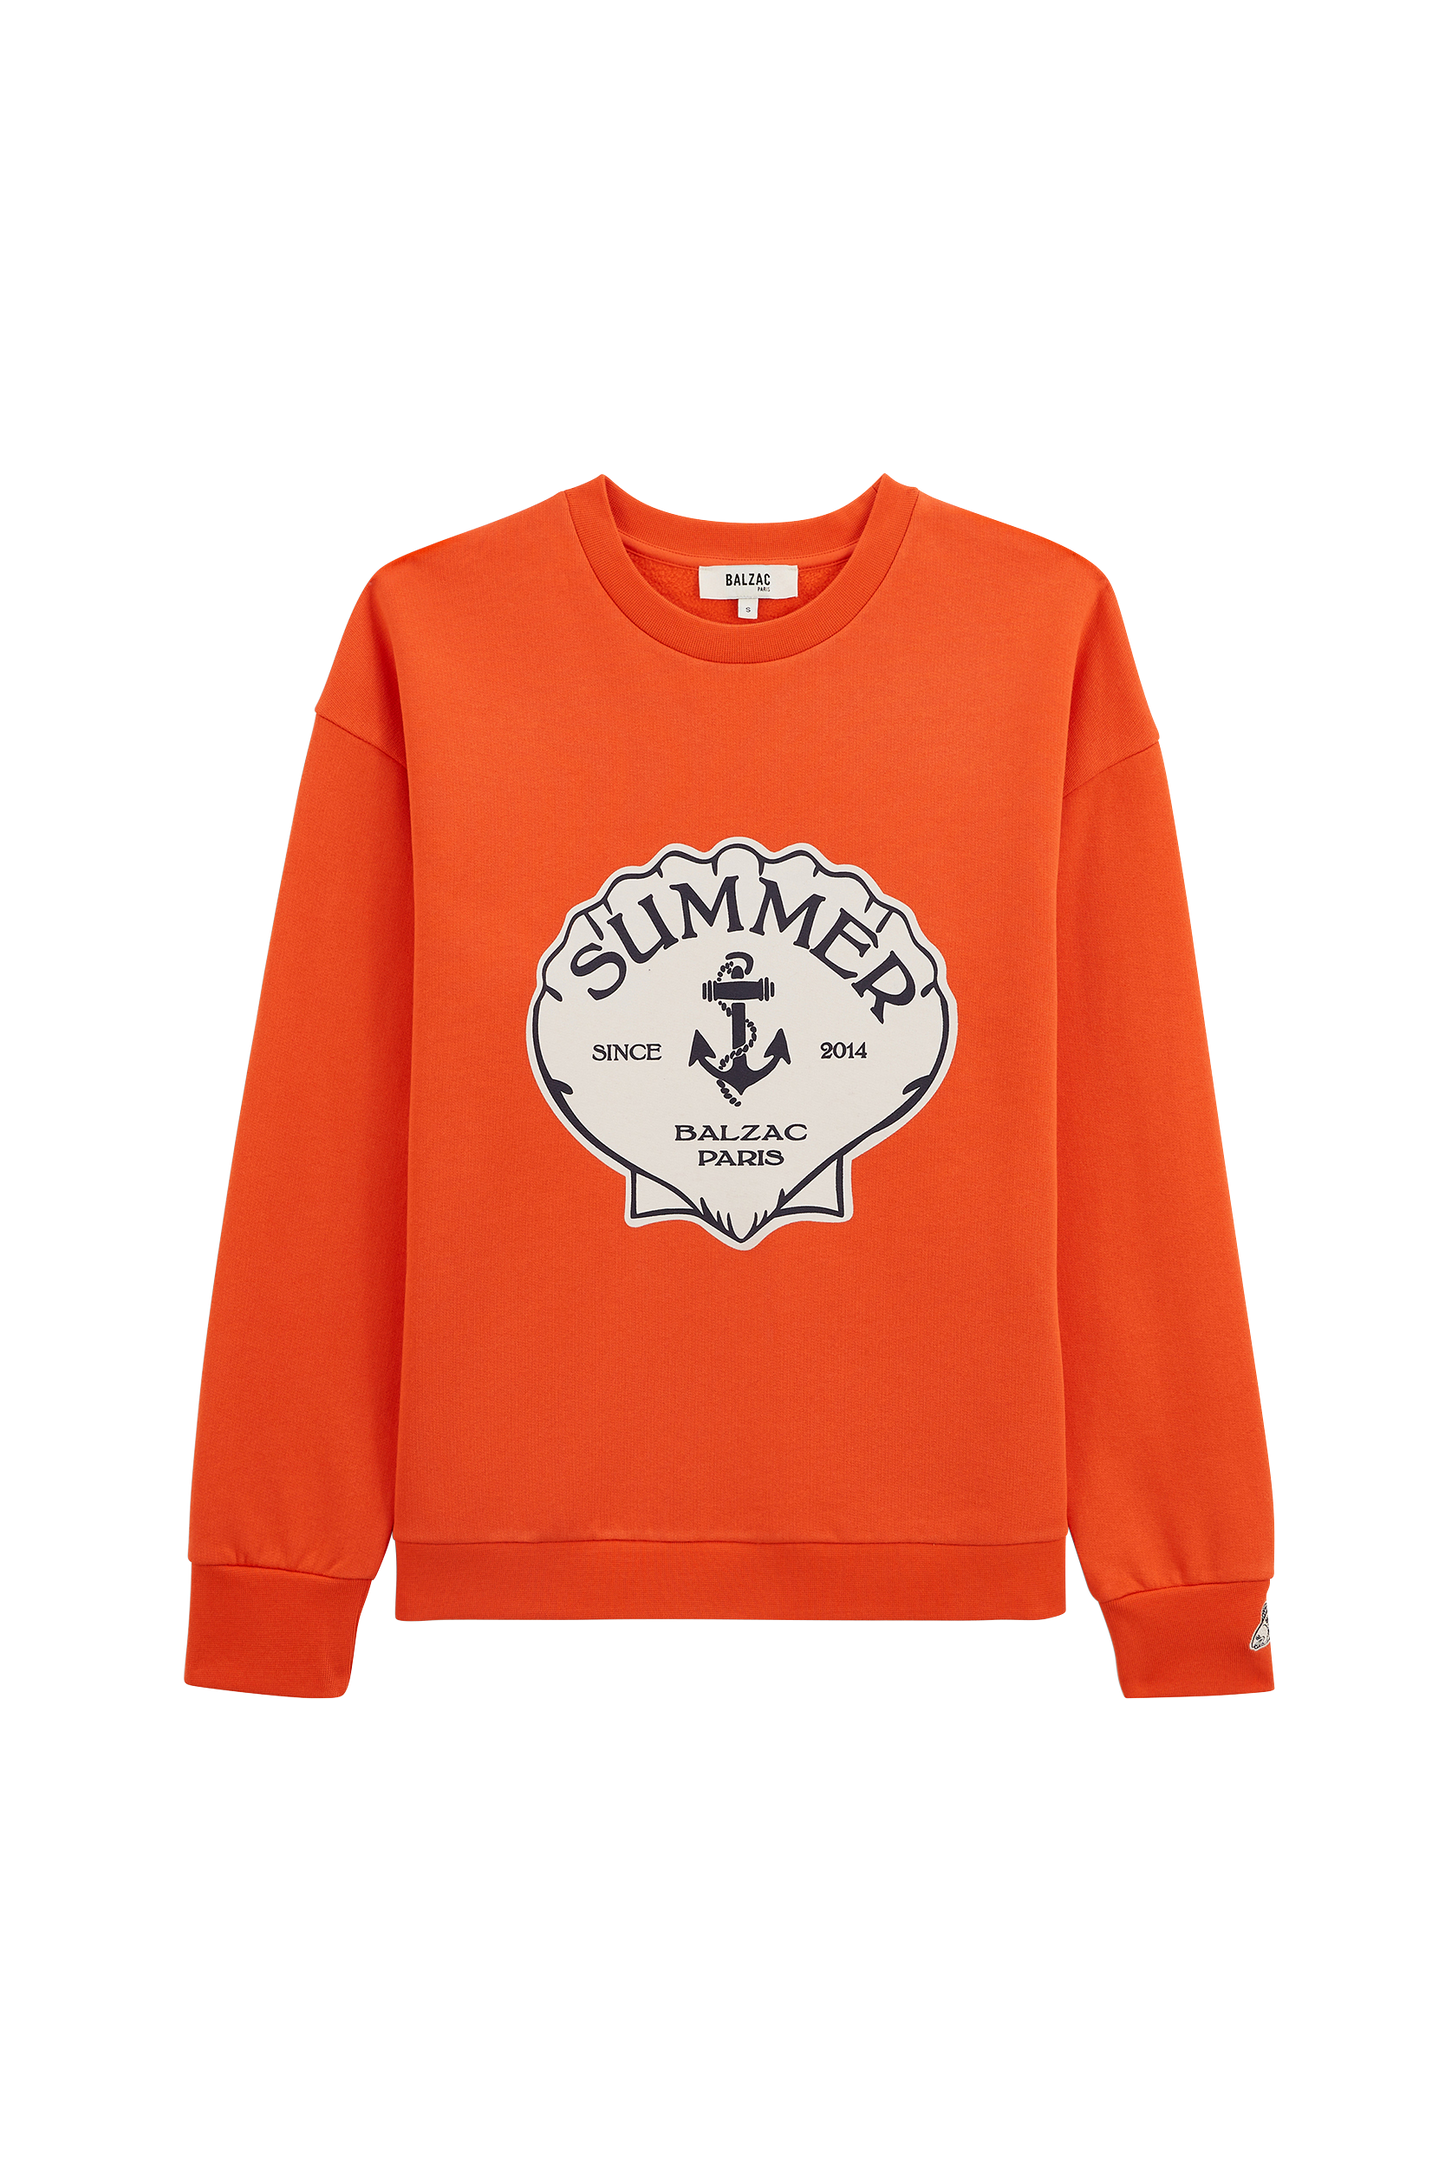 Harlow BP loves Surfrider sweatshirt orange